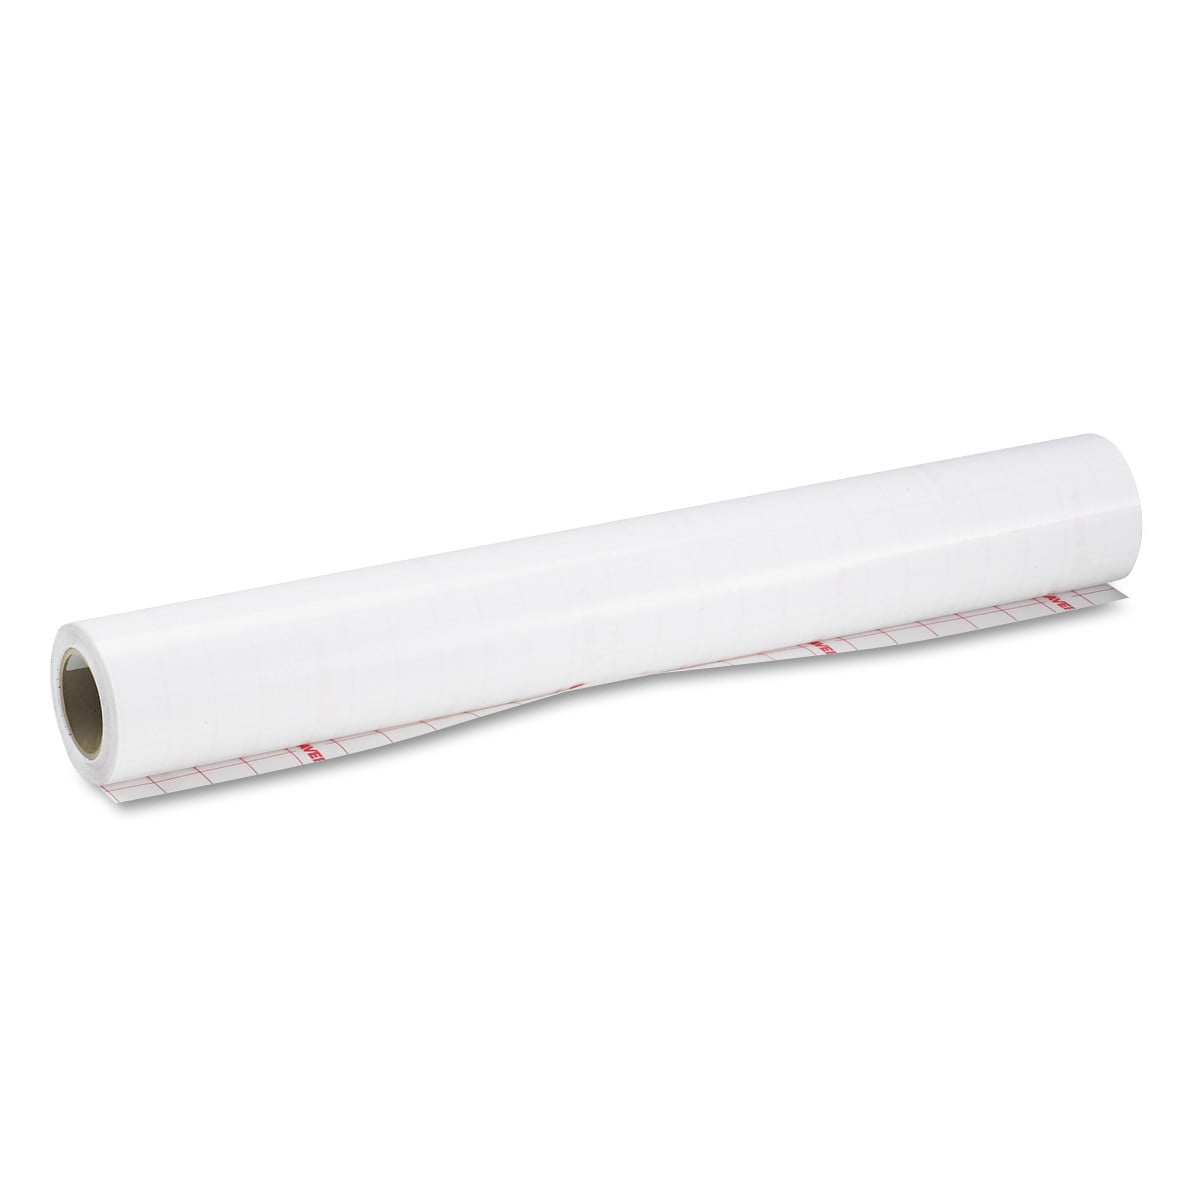 Dry Erase Roll, Self-Adhesive, White, 24 x 10', 1 Roll - INVAR2410, Dixon  Ticonderoga Co - Pacon